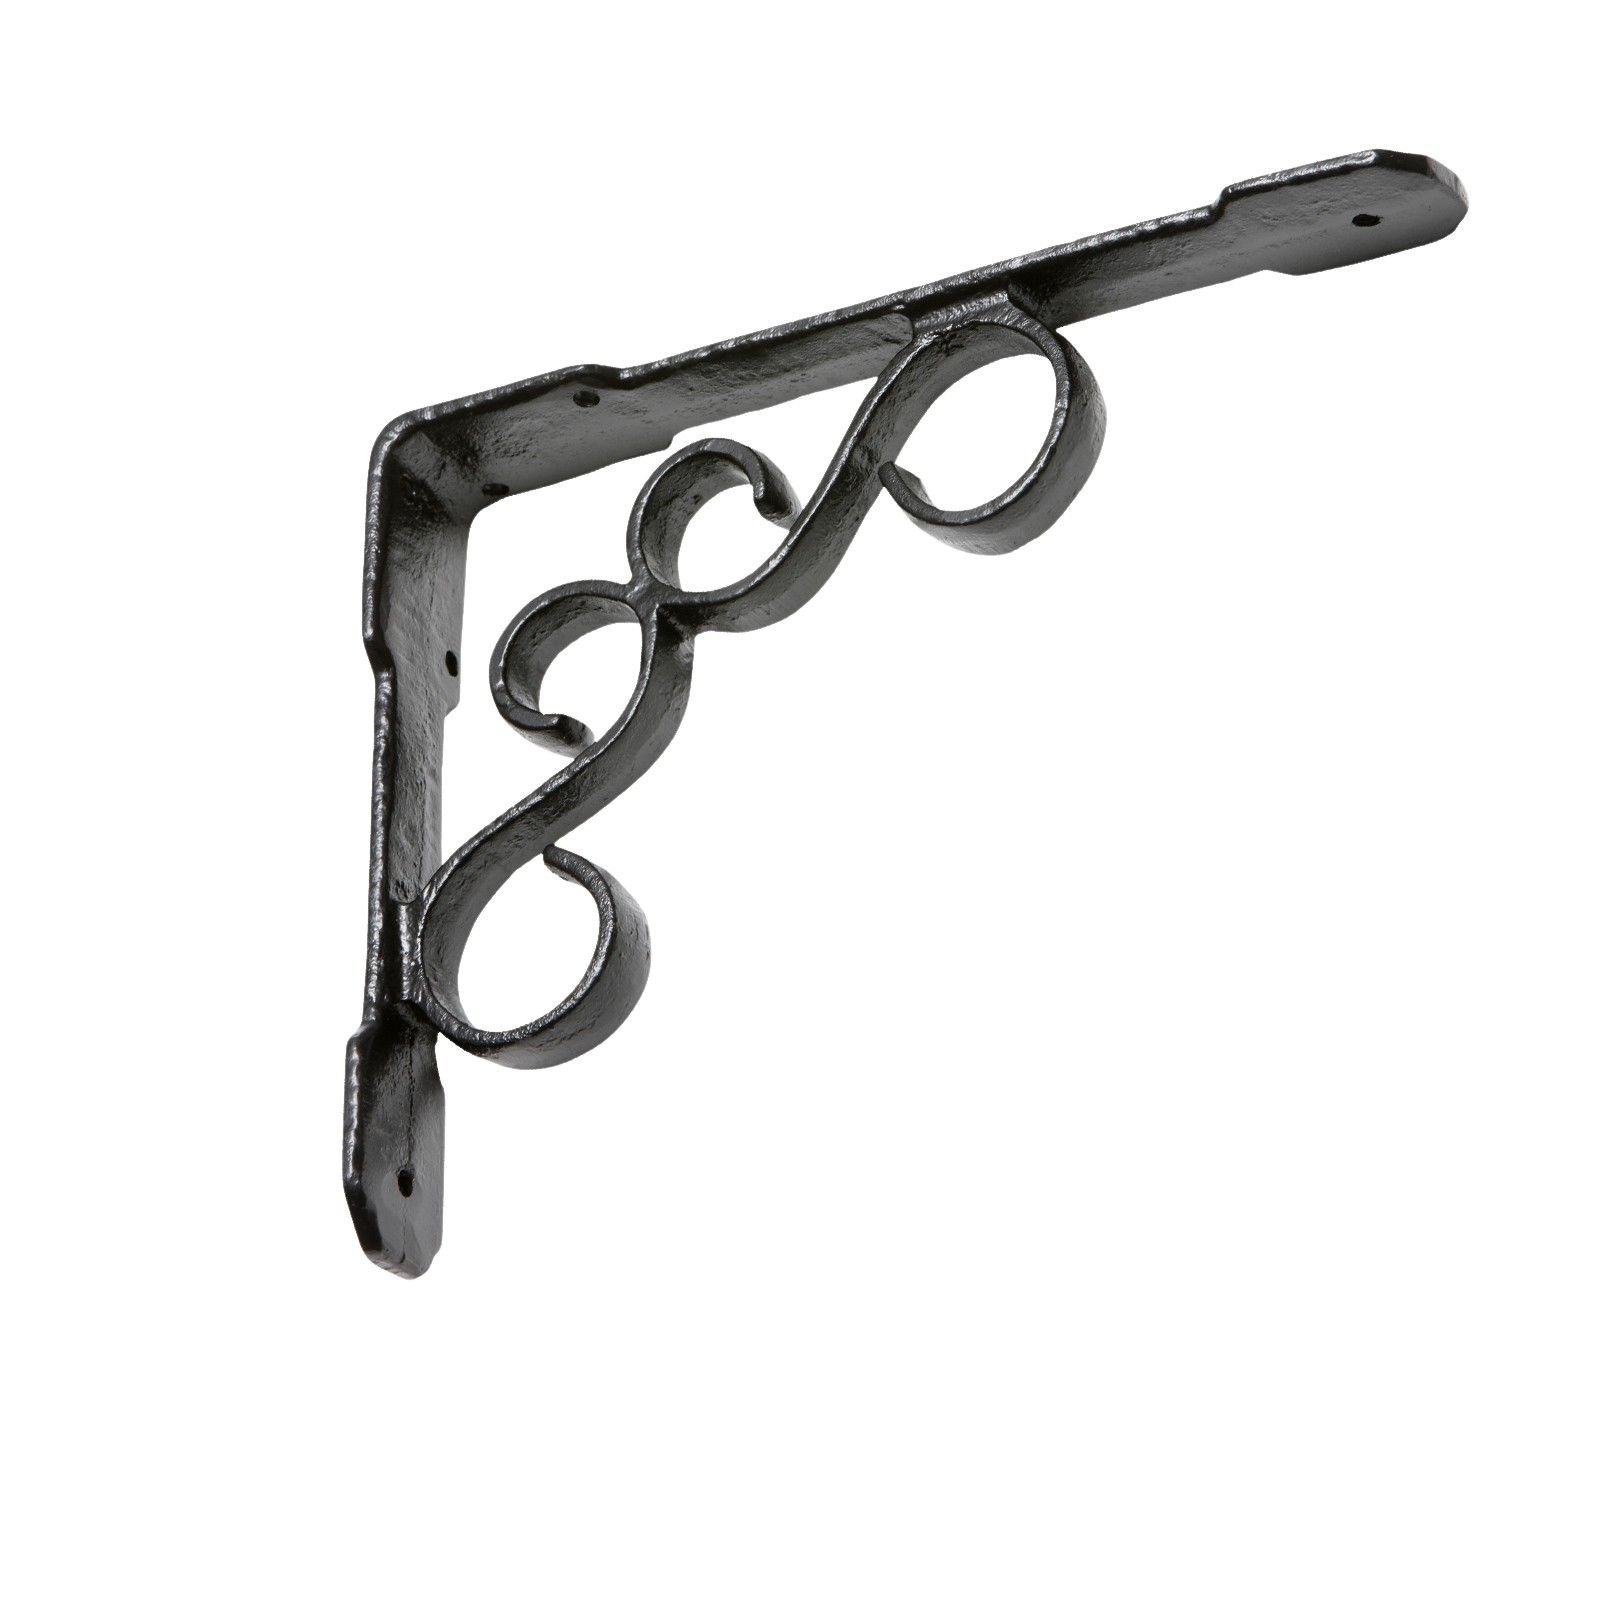 Black iron handcrafted Fireside bracket